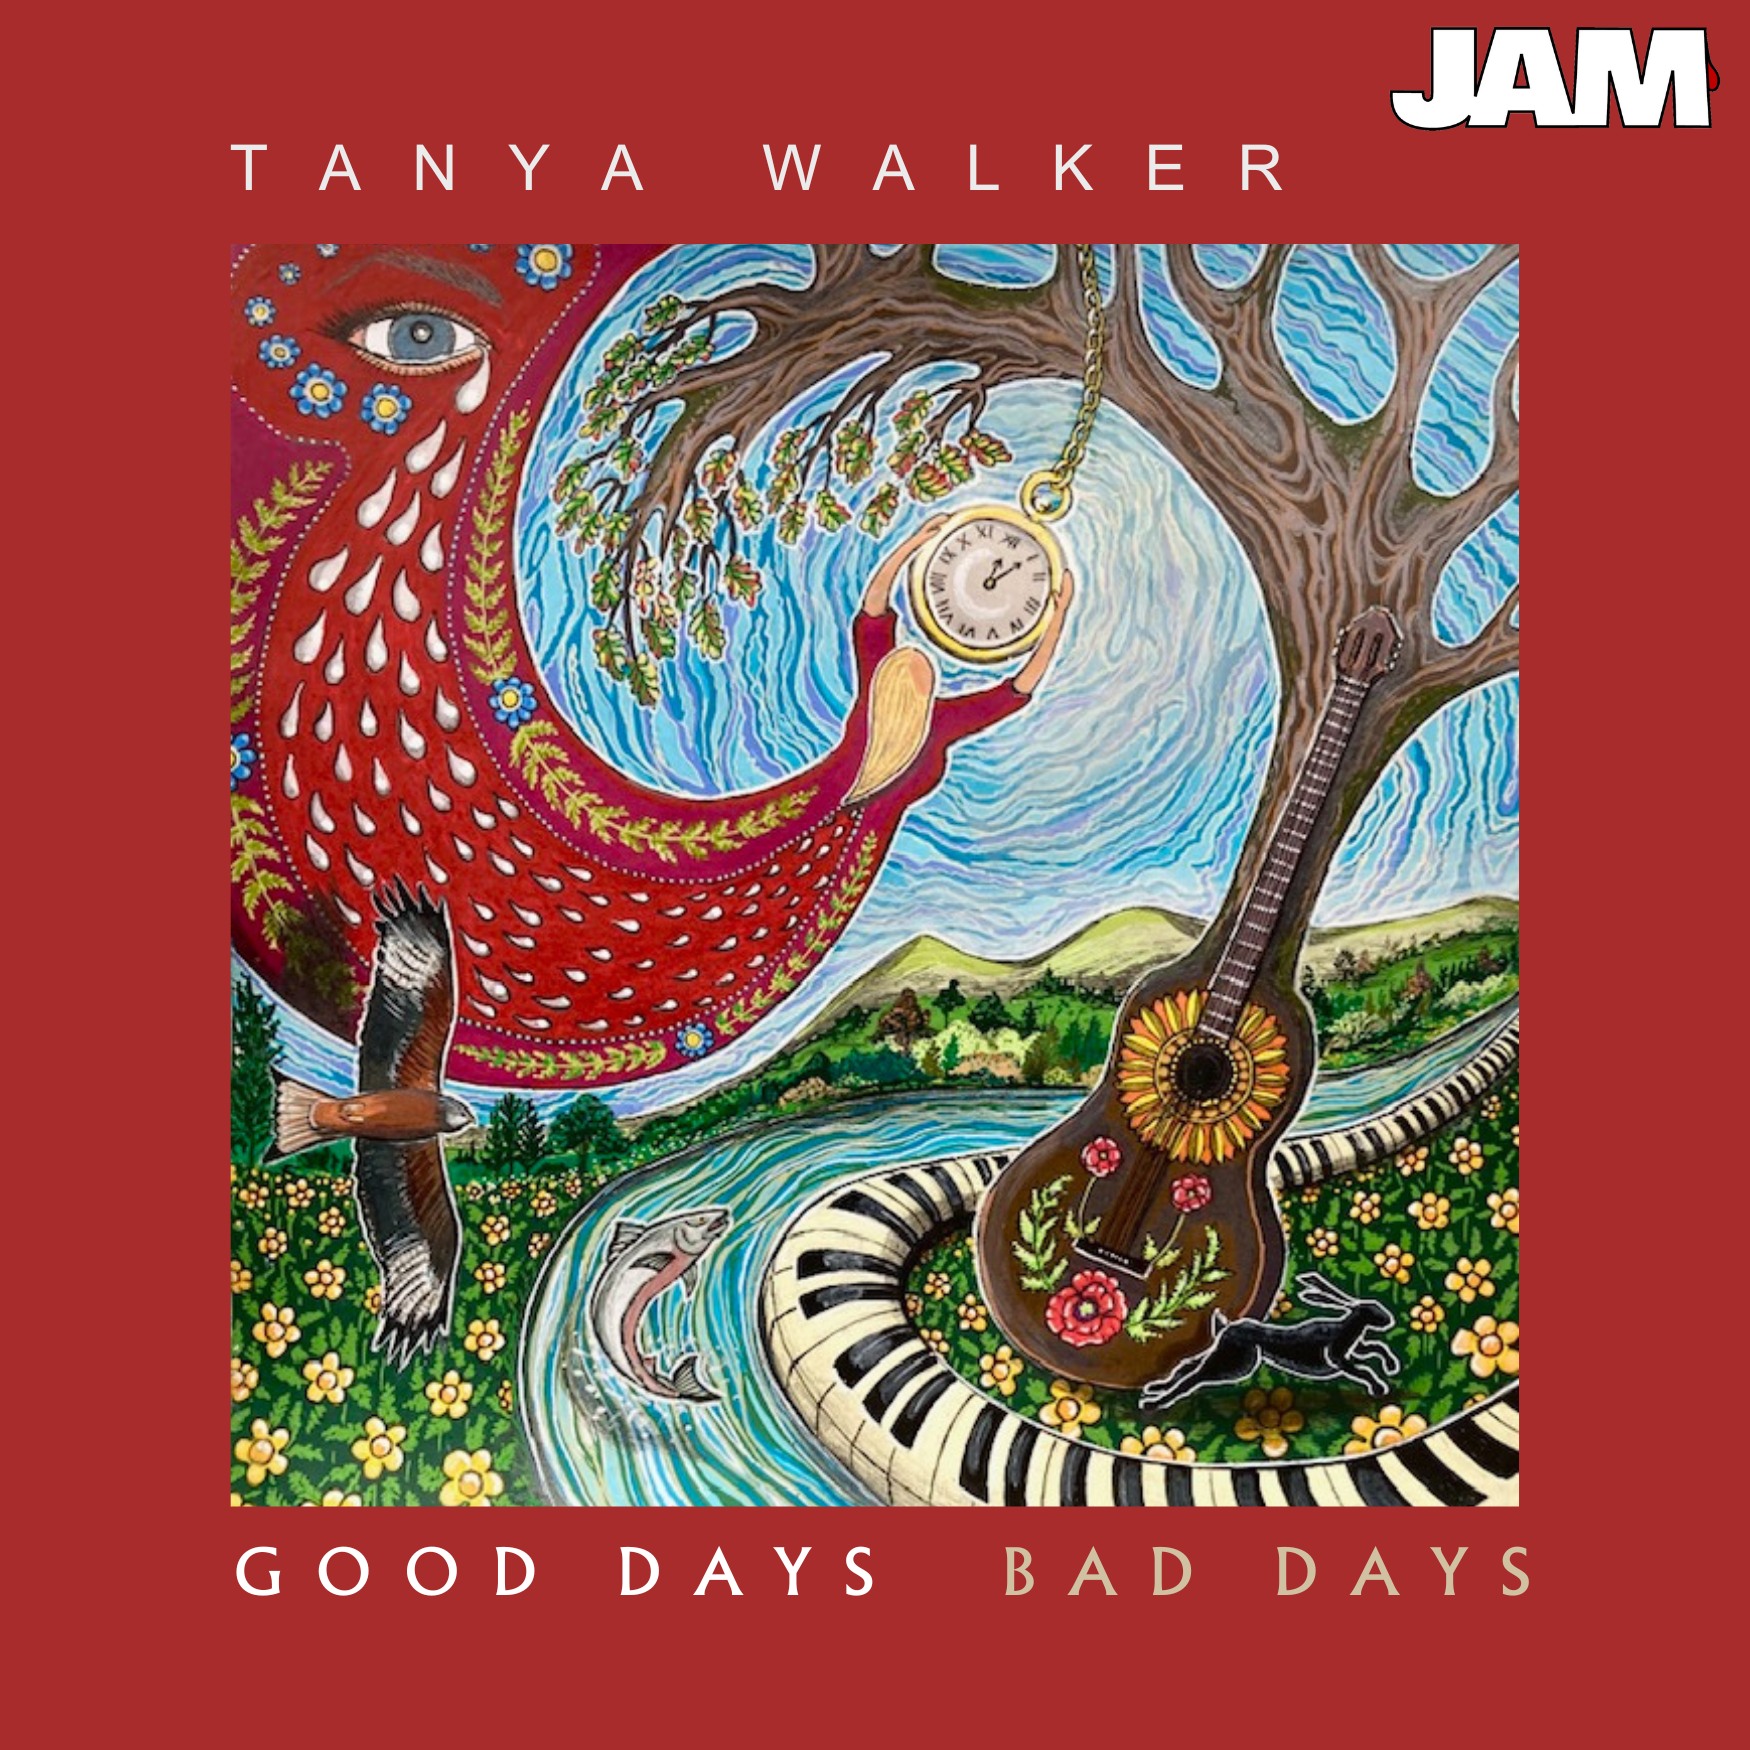 Talent Is Timeless Winner, Tanya Walker Releases New Single "Good Days, Bad Days"